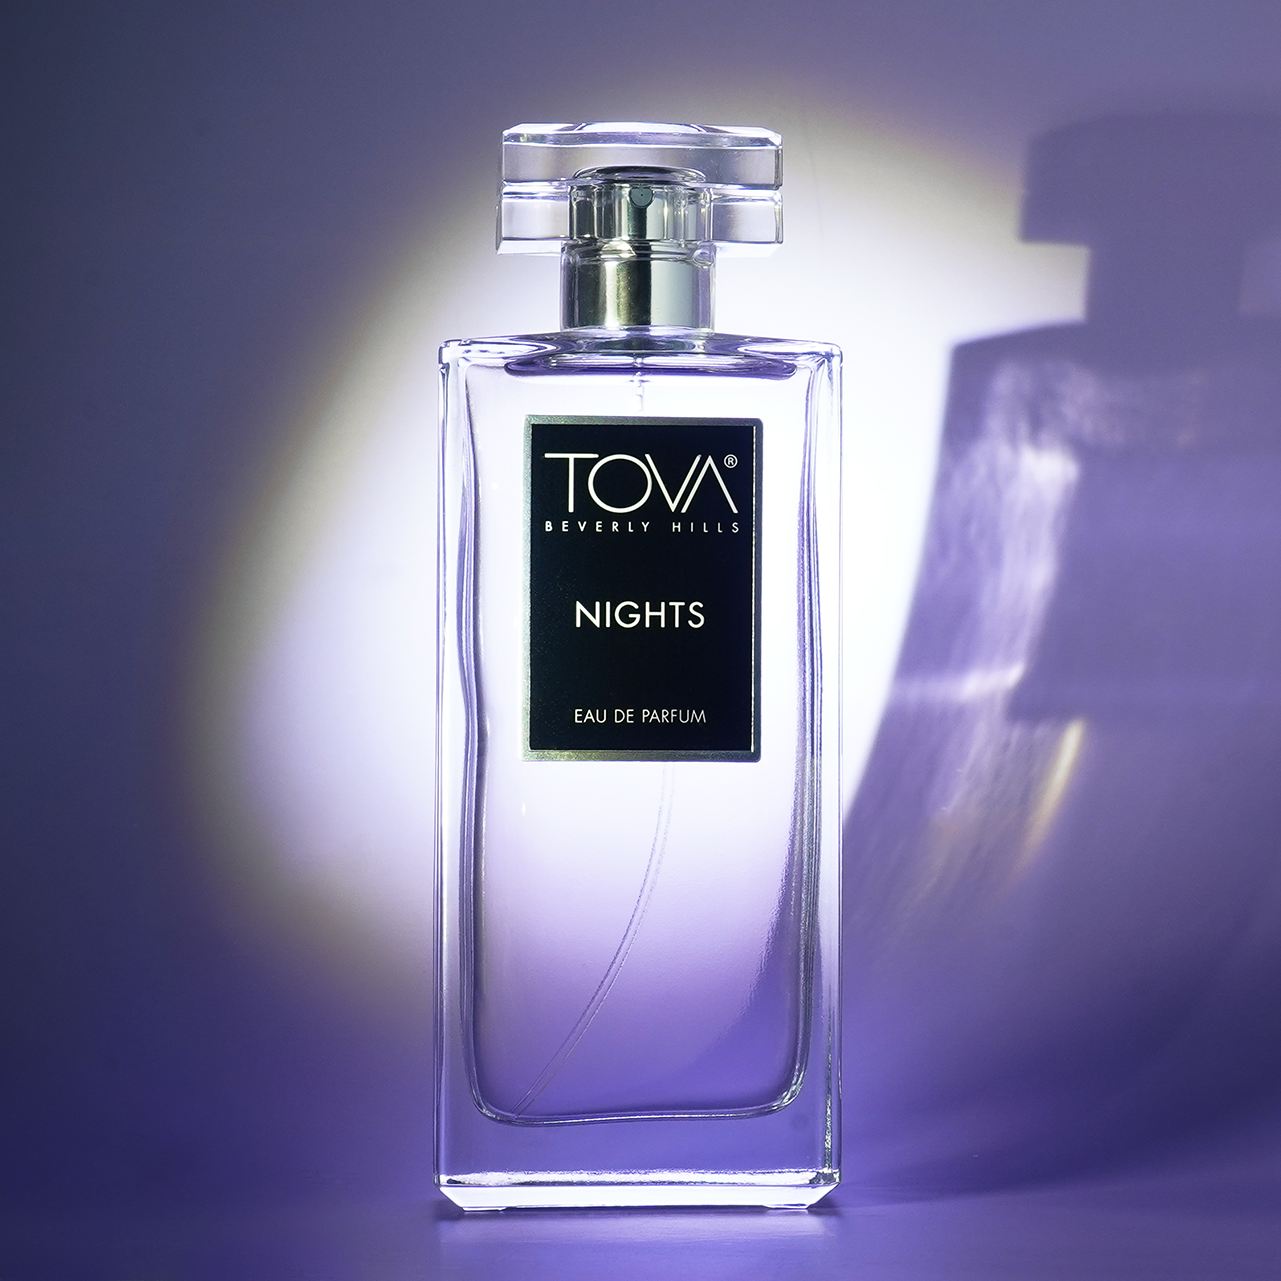 Nights Eau de Parfum 3.4 fl oz